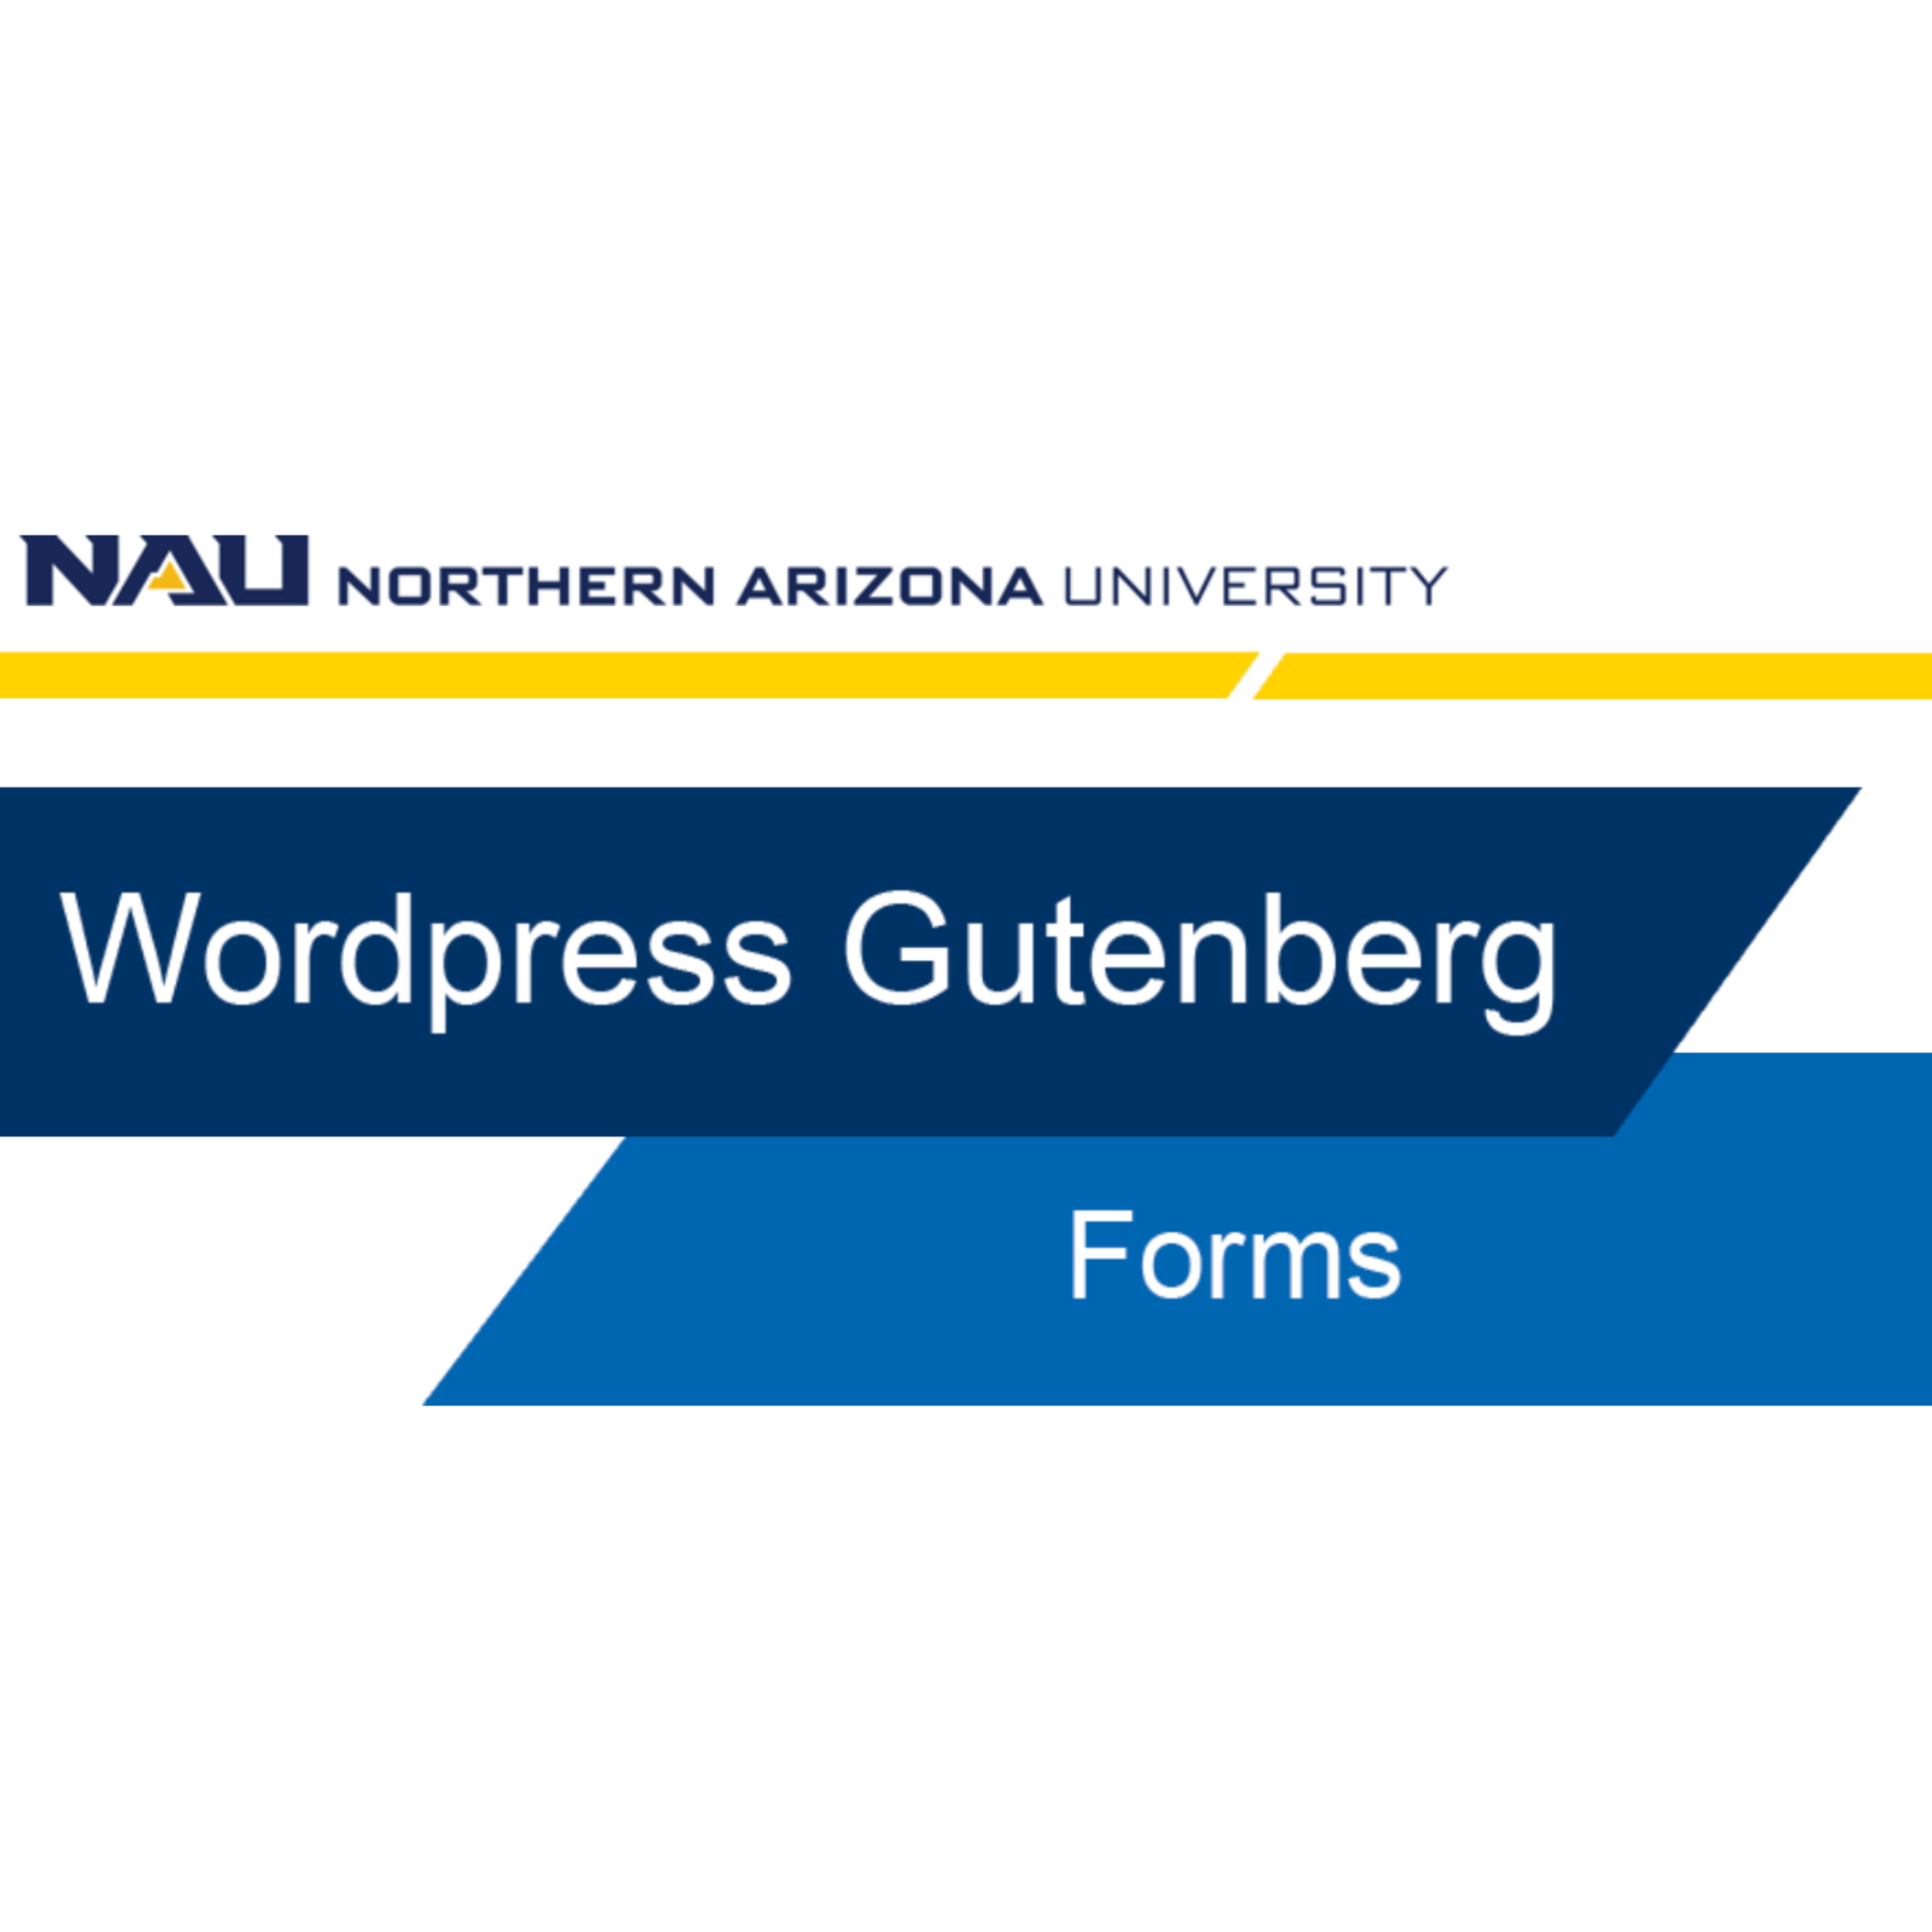 Thumbnail image of the Northern Arizona University WordPress Gutenberg tutorial start page, titled 'Forms'.